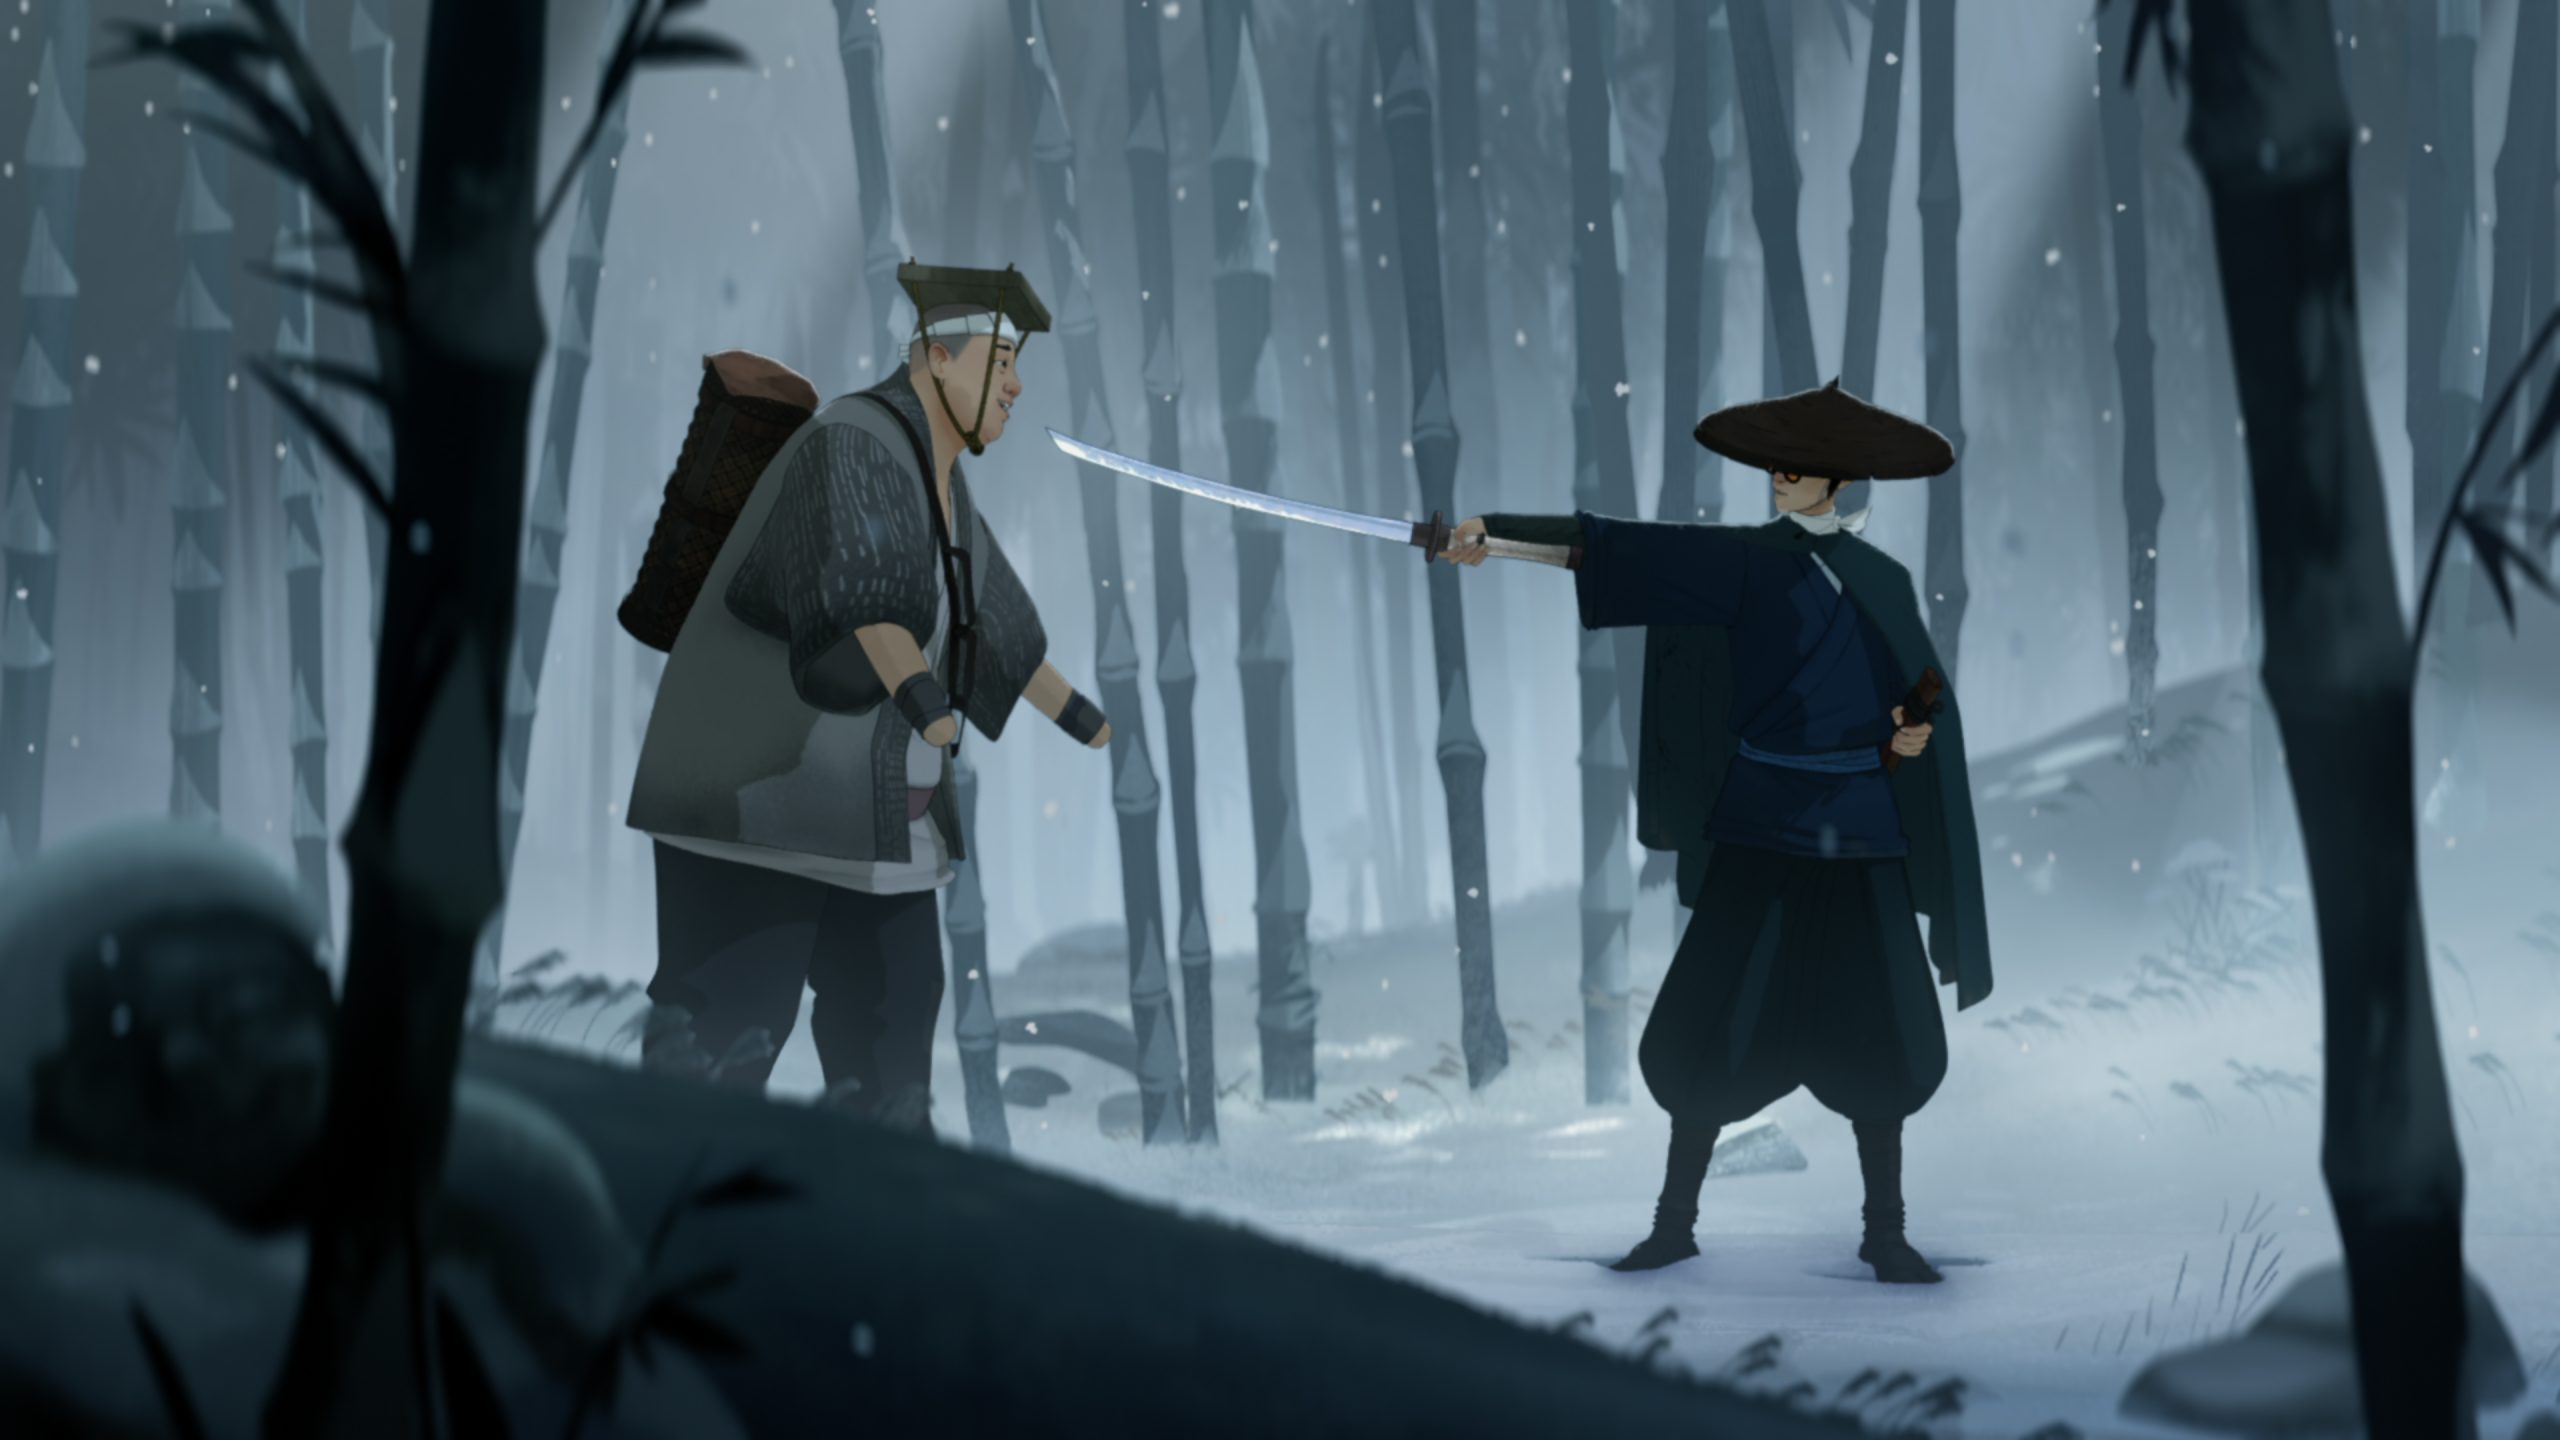 Anime 2560x1440 Blue Eye Samurai Netflix TV Series sword katana Japan samurai snow women with swords